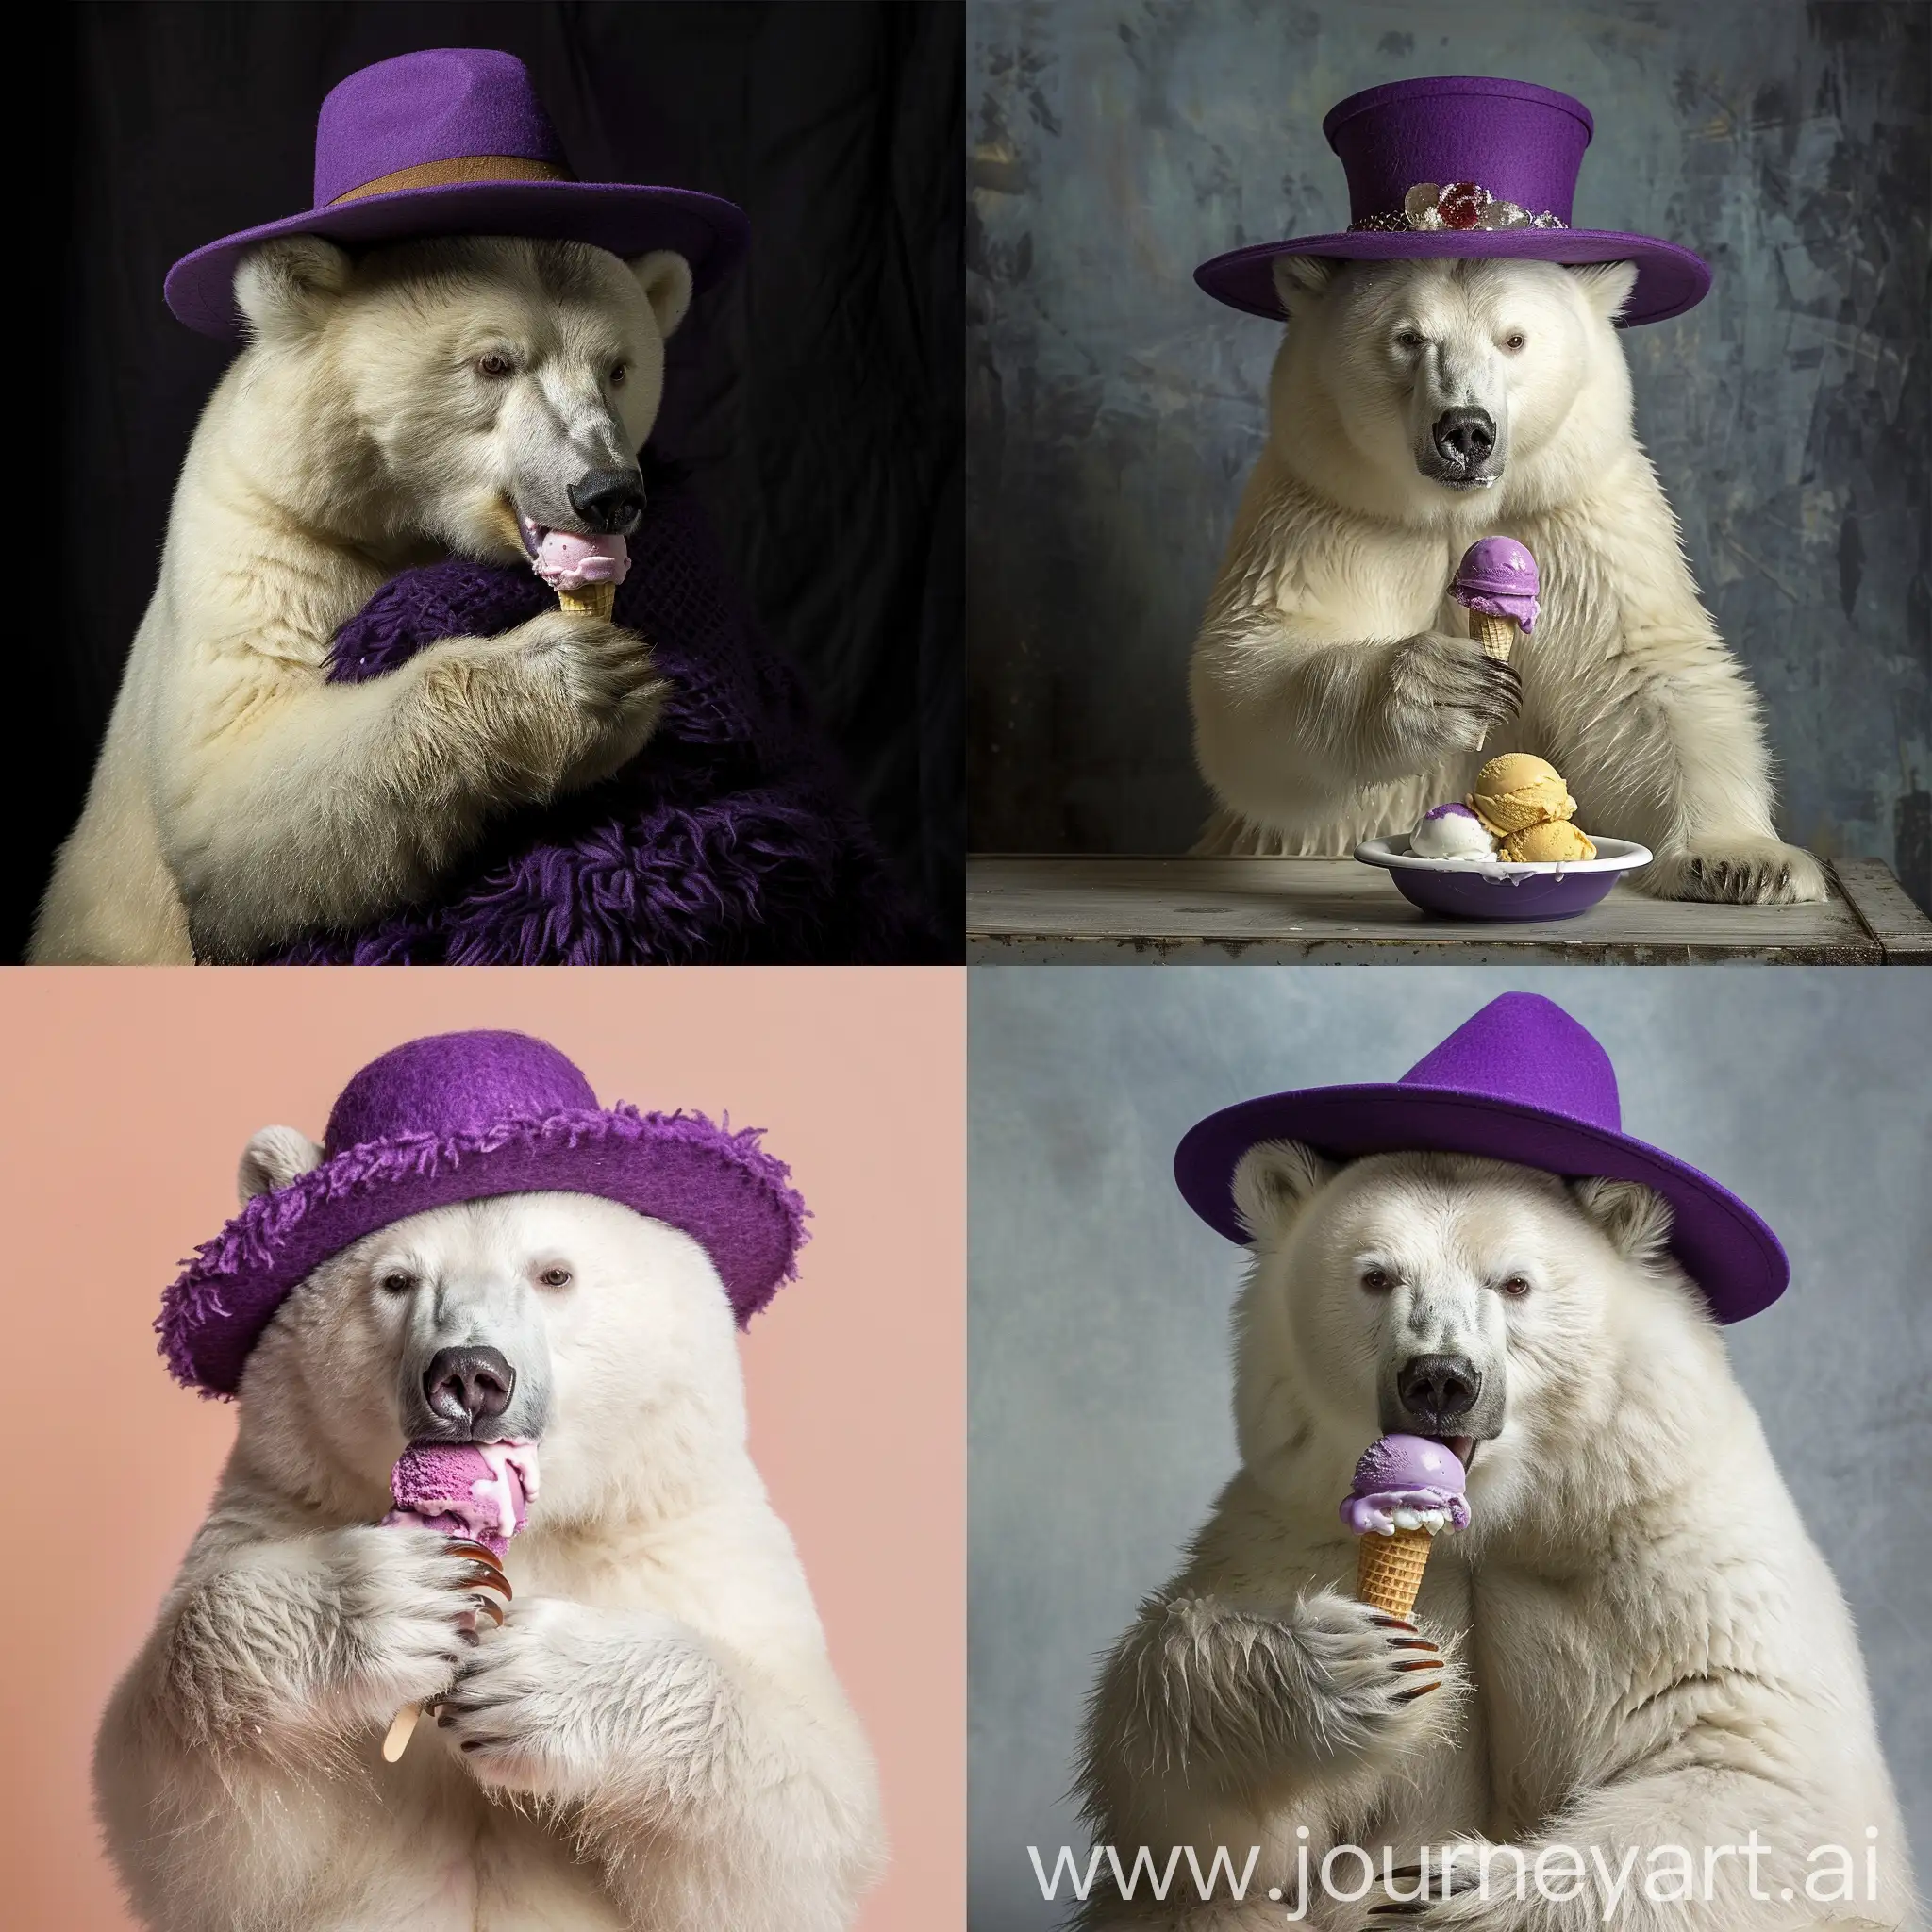 Cute-Polar-Bear-Enjoying-Ice-Cream-in-a-Stylish-Purple-Hat